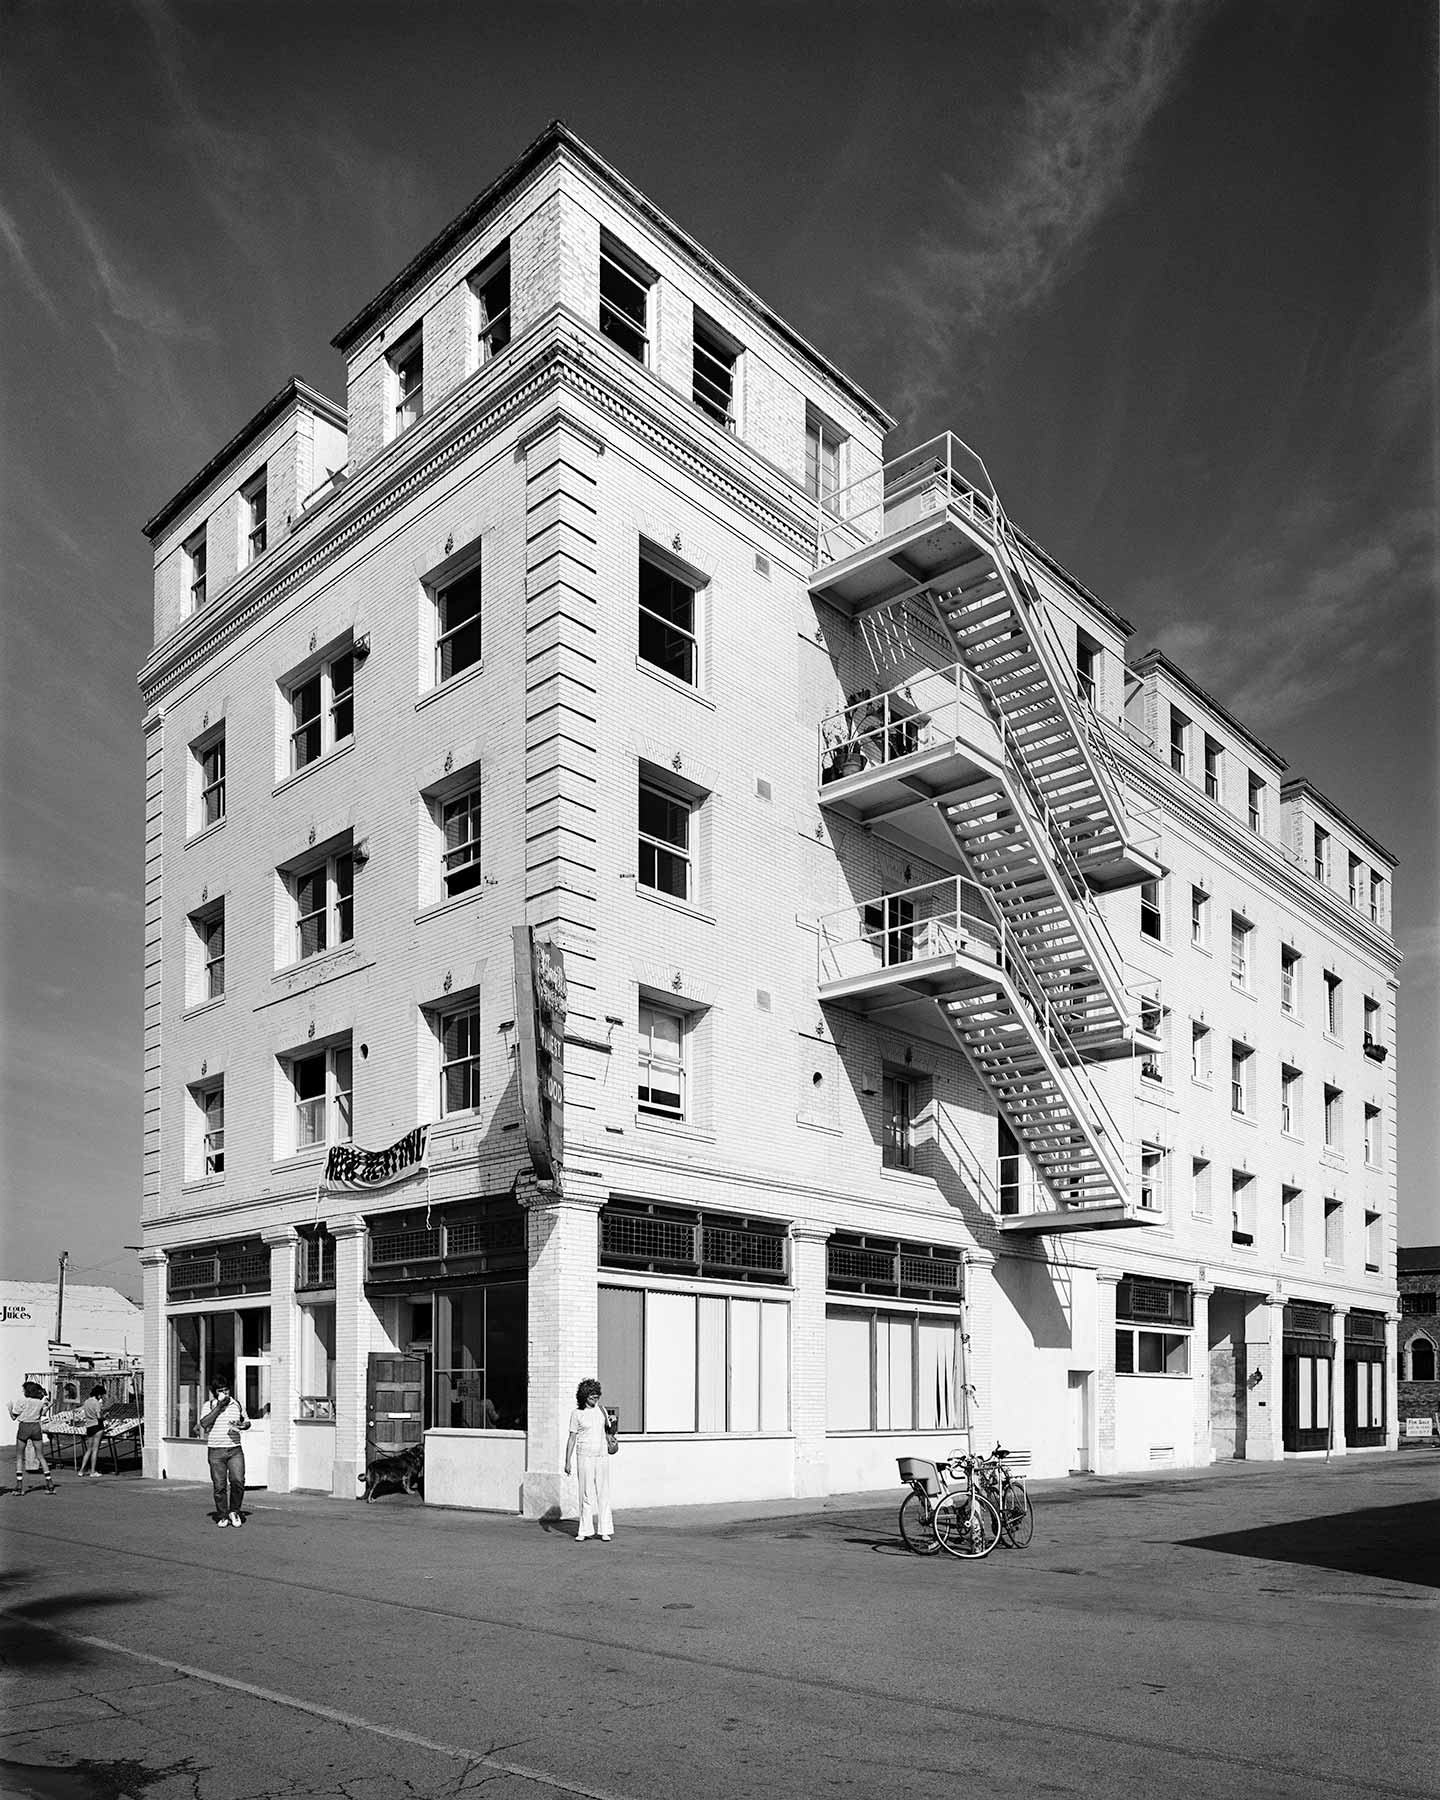 Venice Beach,The Waldorf, 1915 building